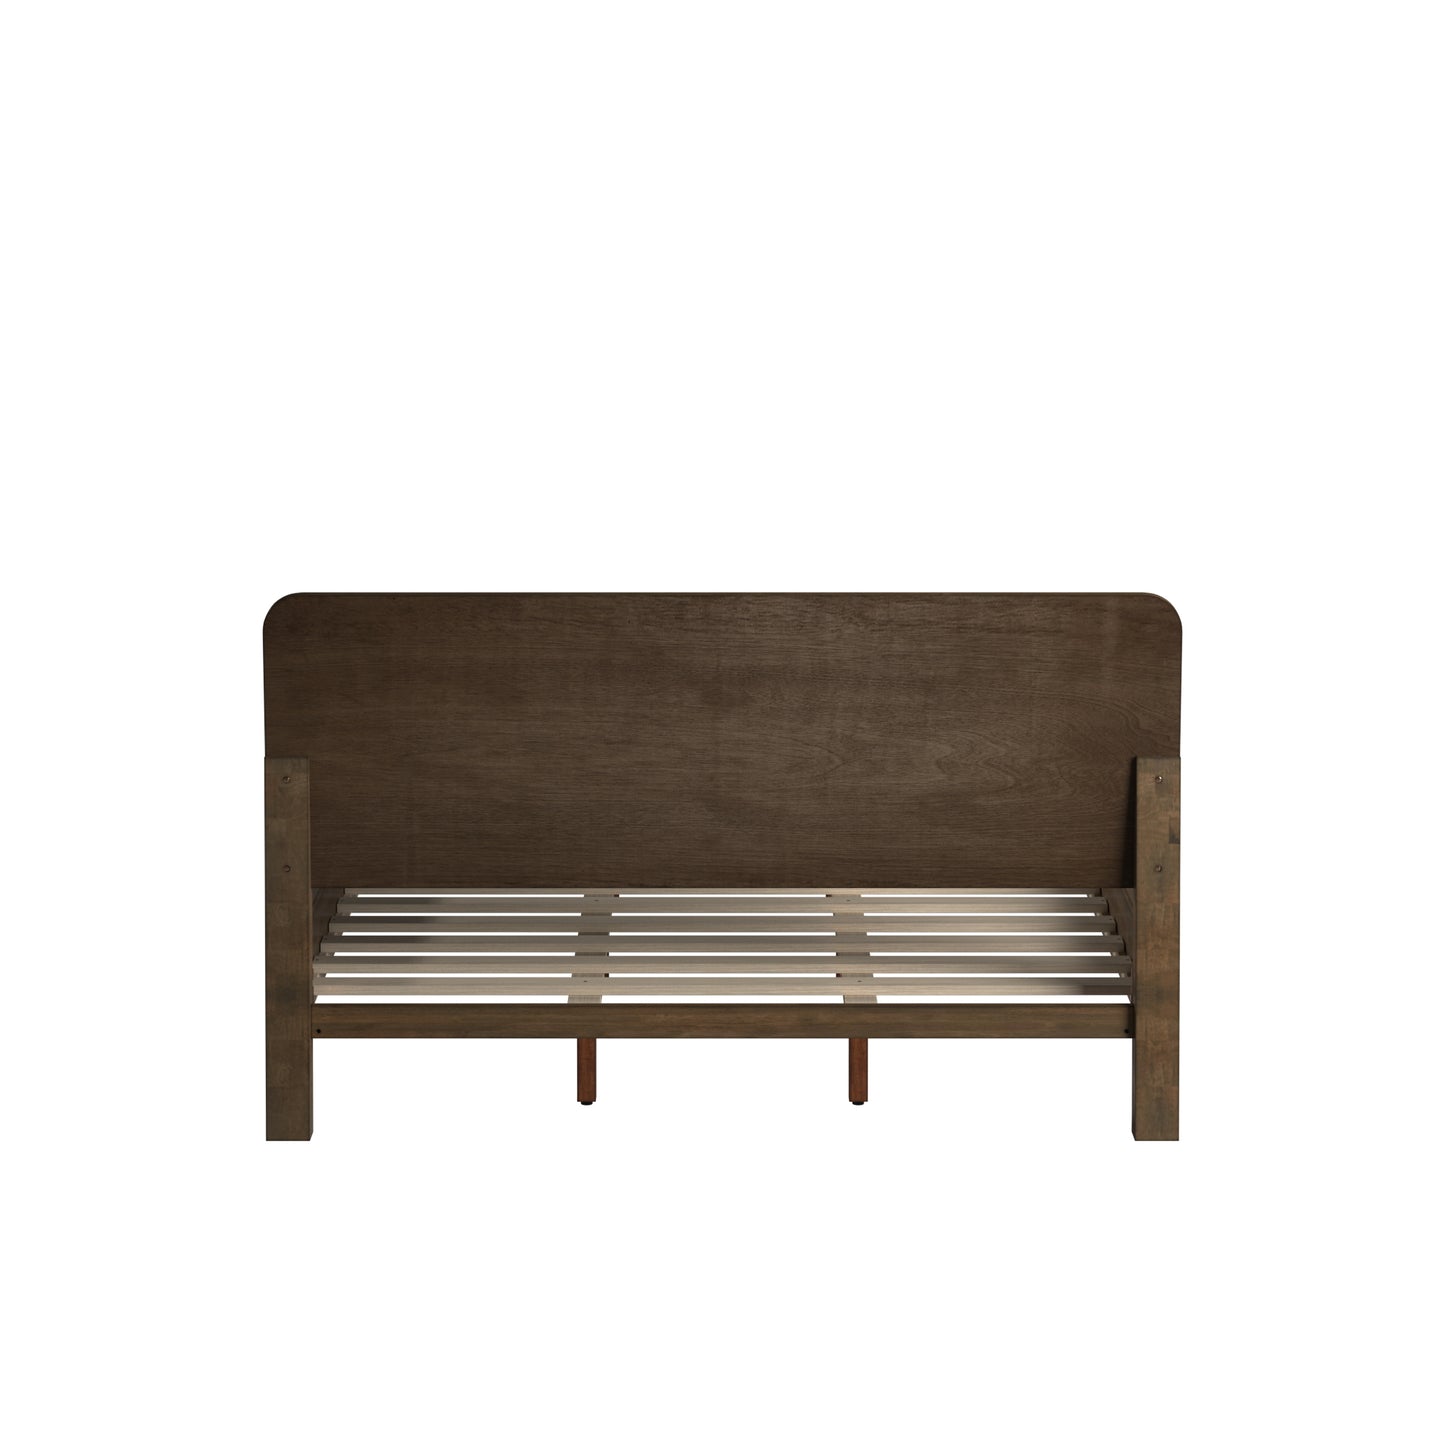 Wood Platform Bed - Walnut Finish, Queen Size